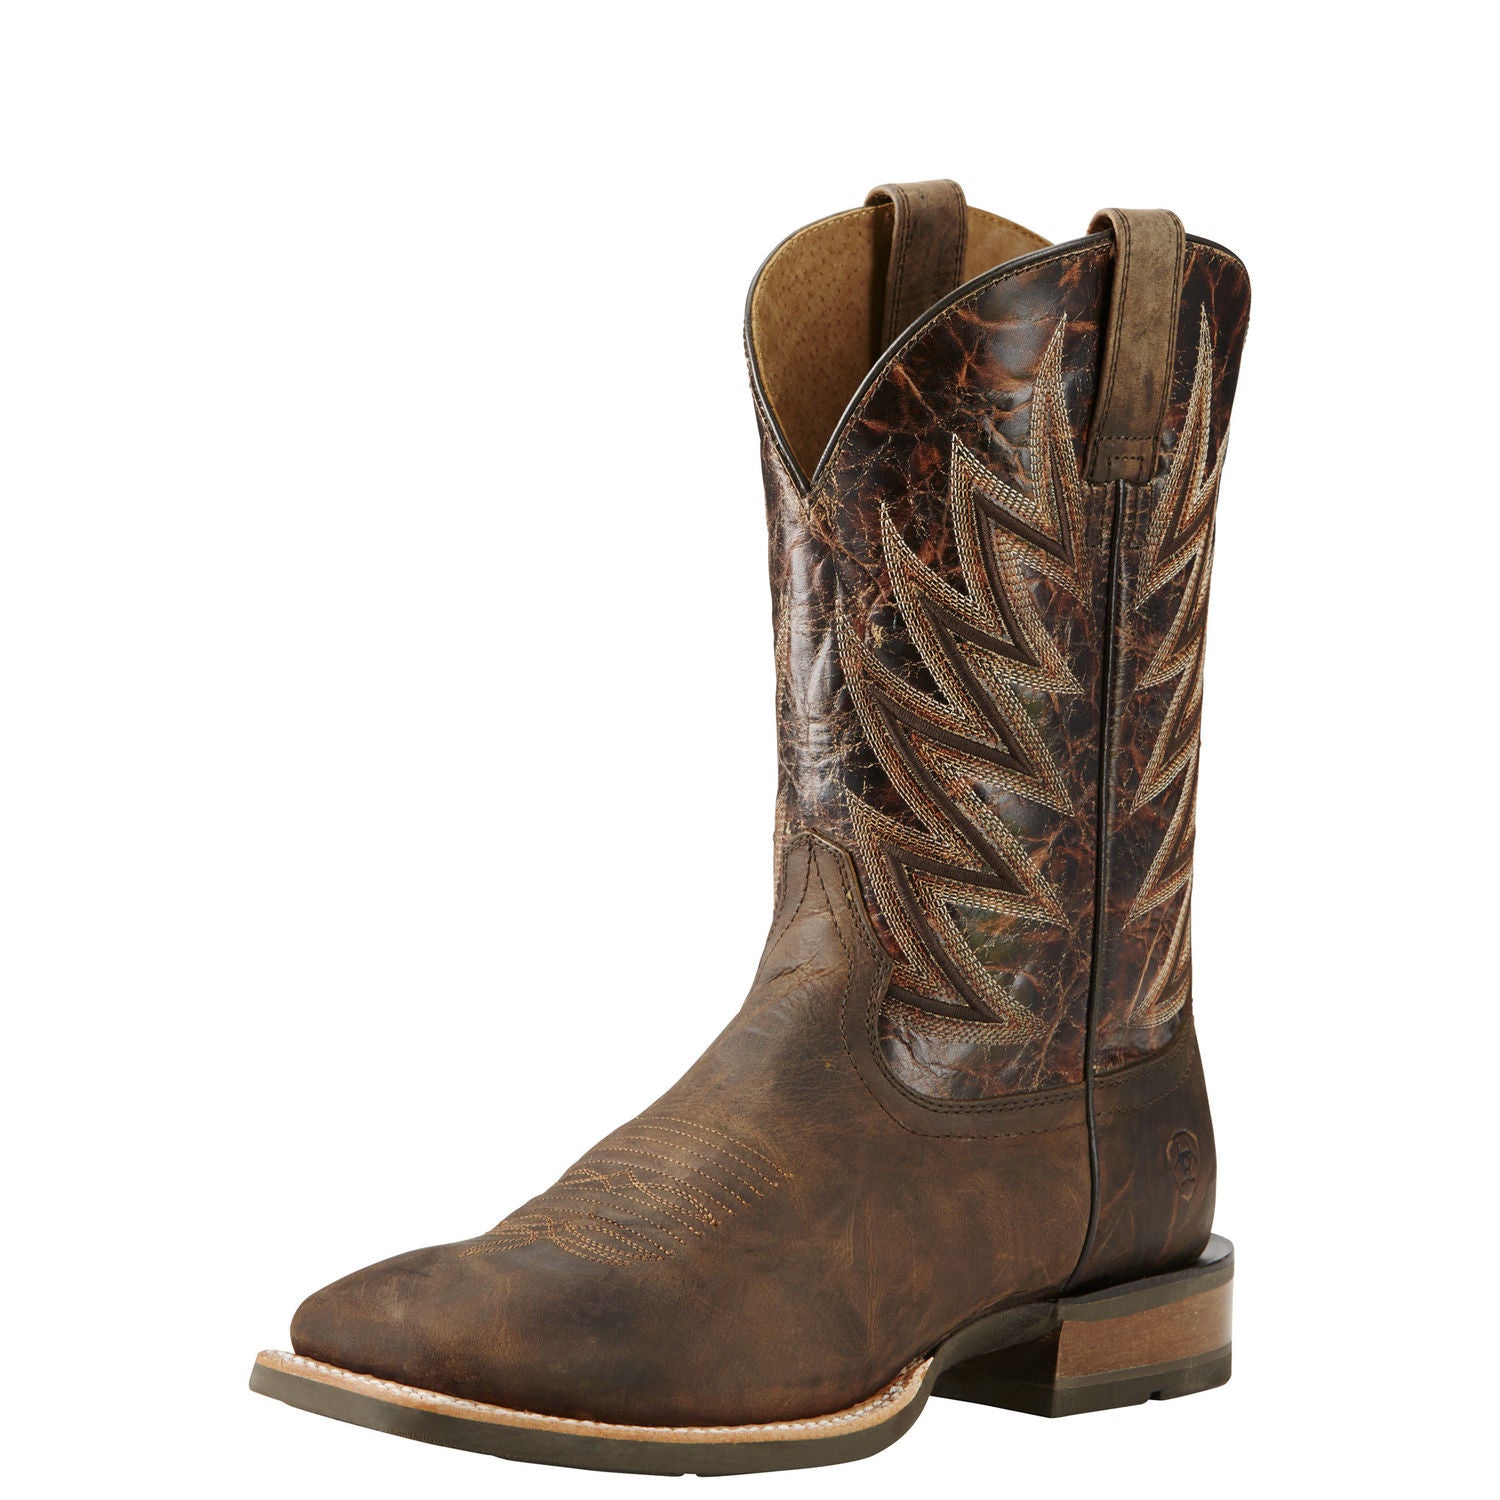 Ariat 11" Challenger Western Boots - Branding Iron Brown 1001869 -